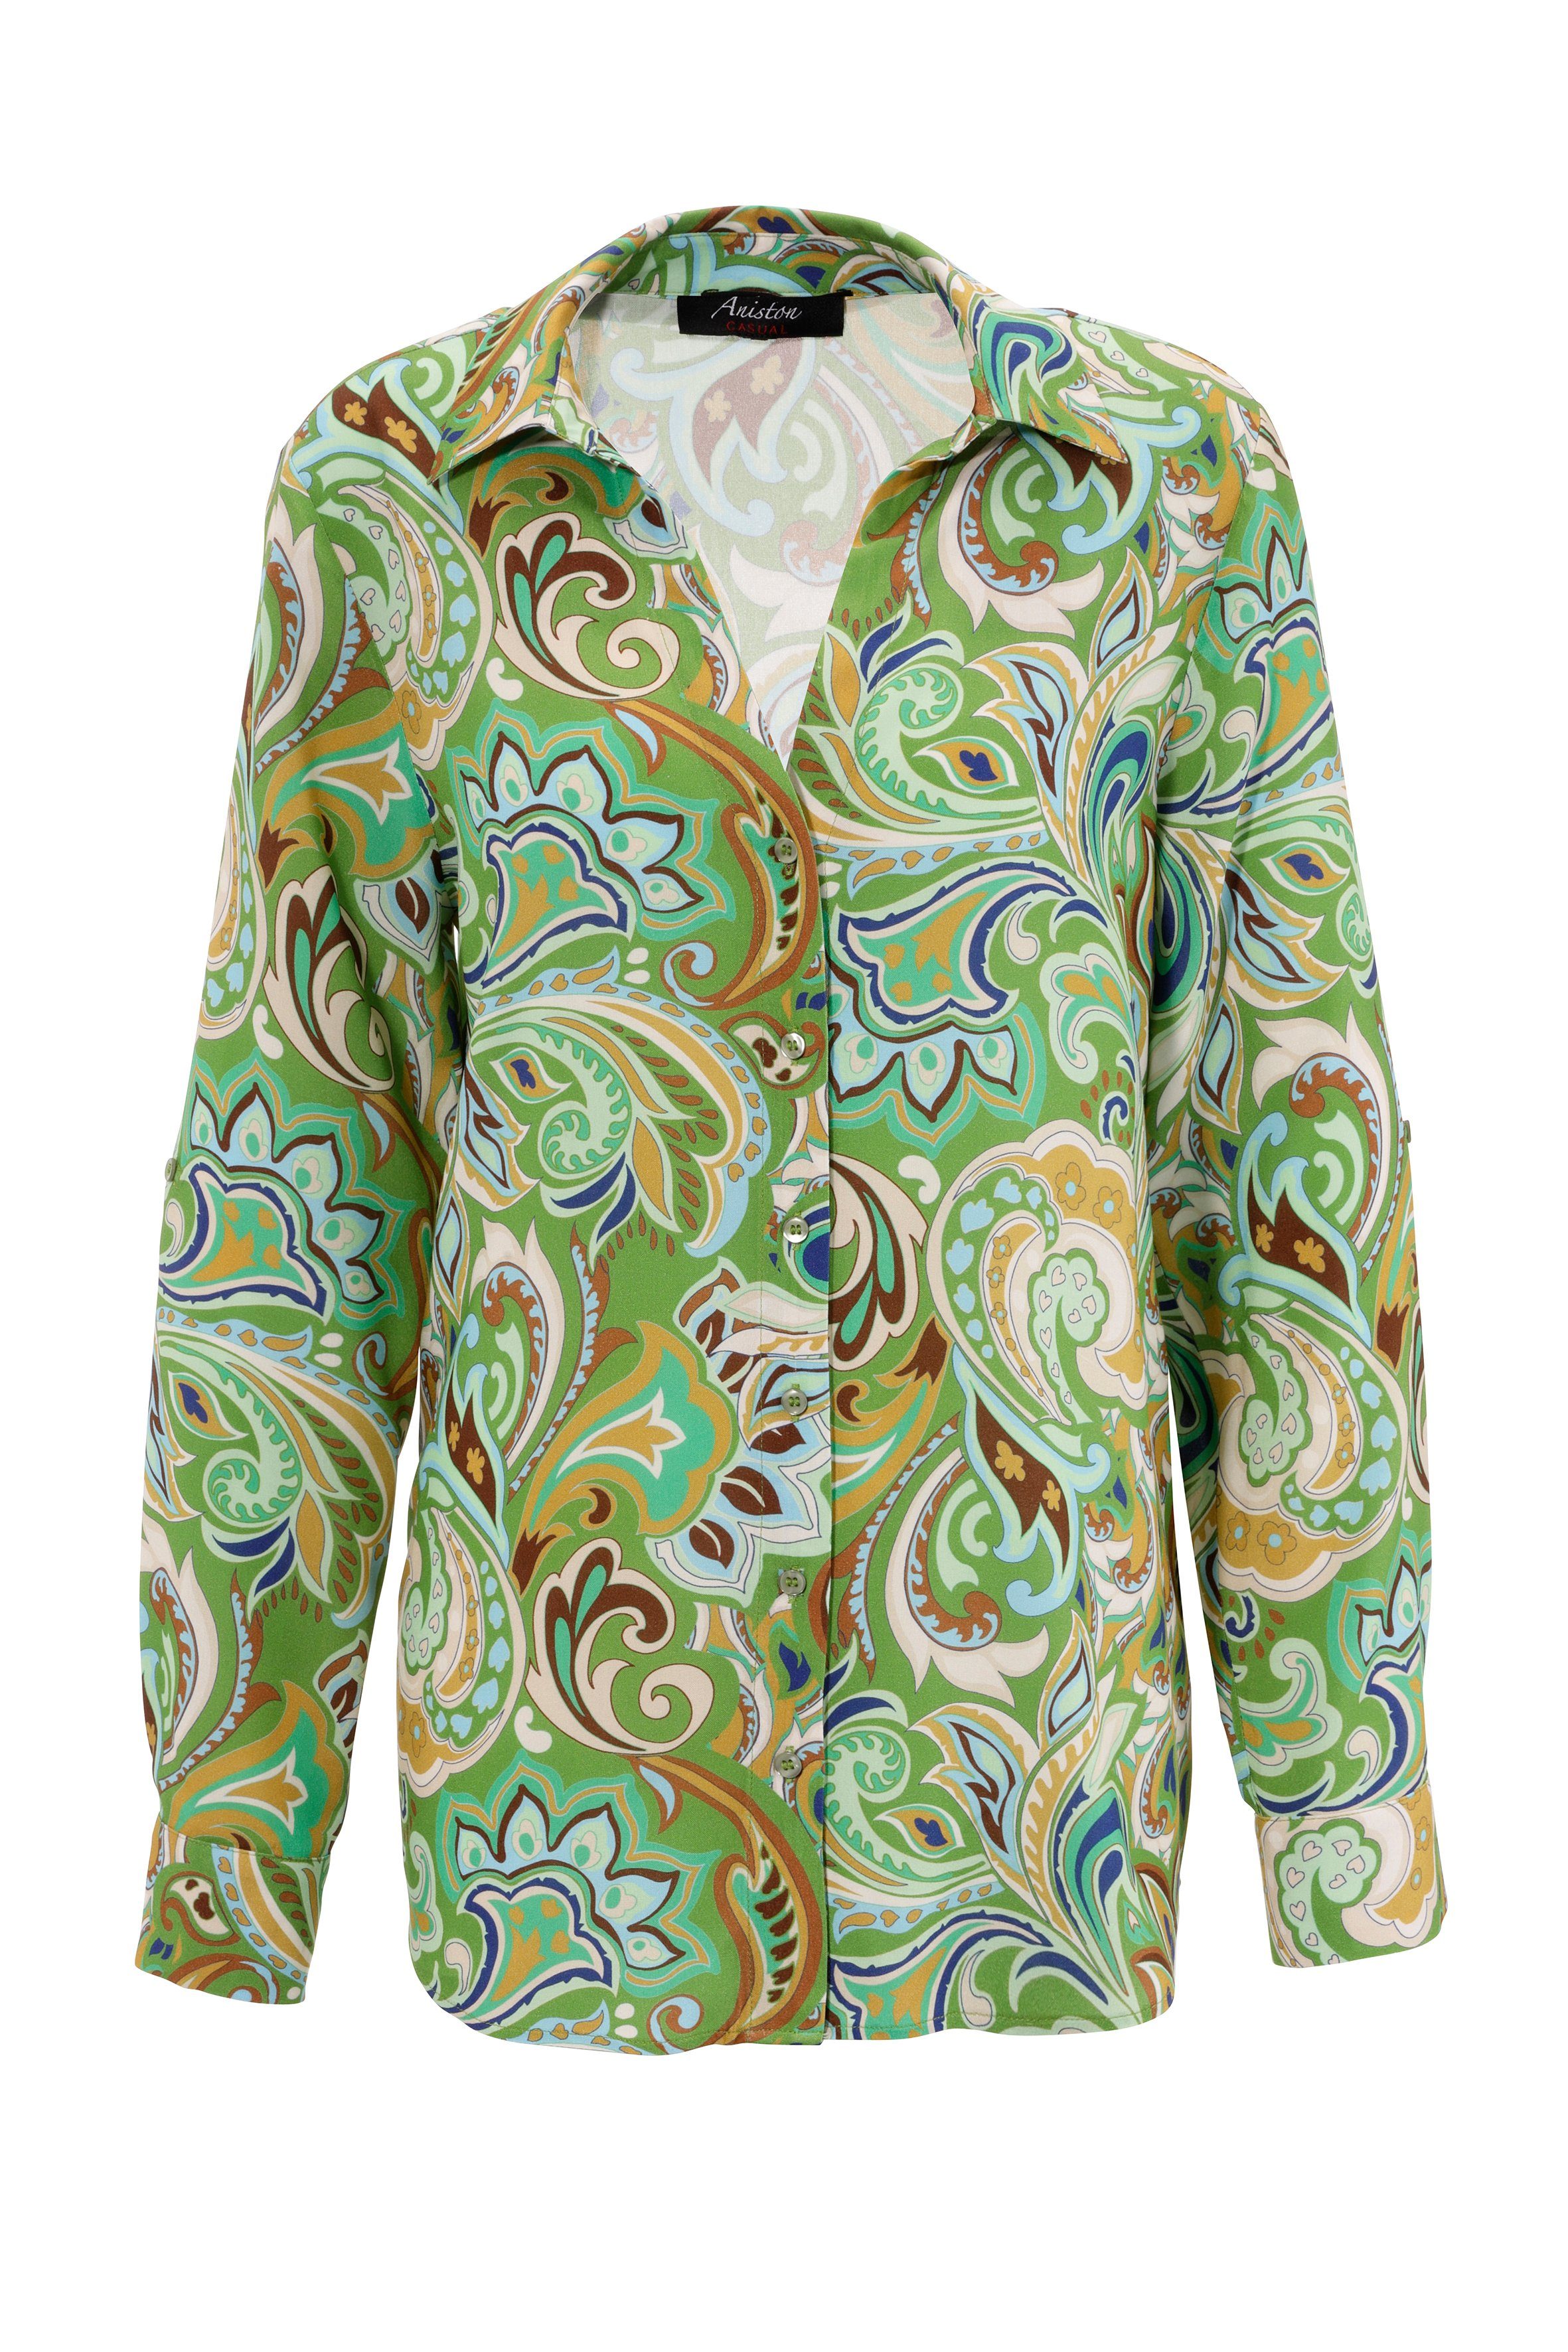 Unikat Aniston Paisley-Muster moosgrünsand-smaragd-royalblau-ocker-hellgrün-hellbeige-türkis-braun-sand-dunkelbraun - ein jedes Hemdbluse Teil CASUAL graphische